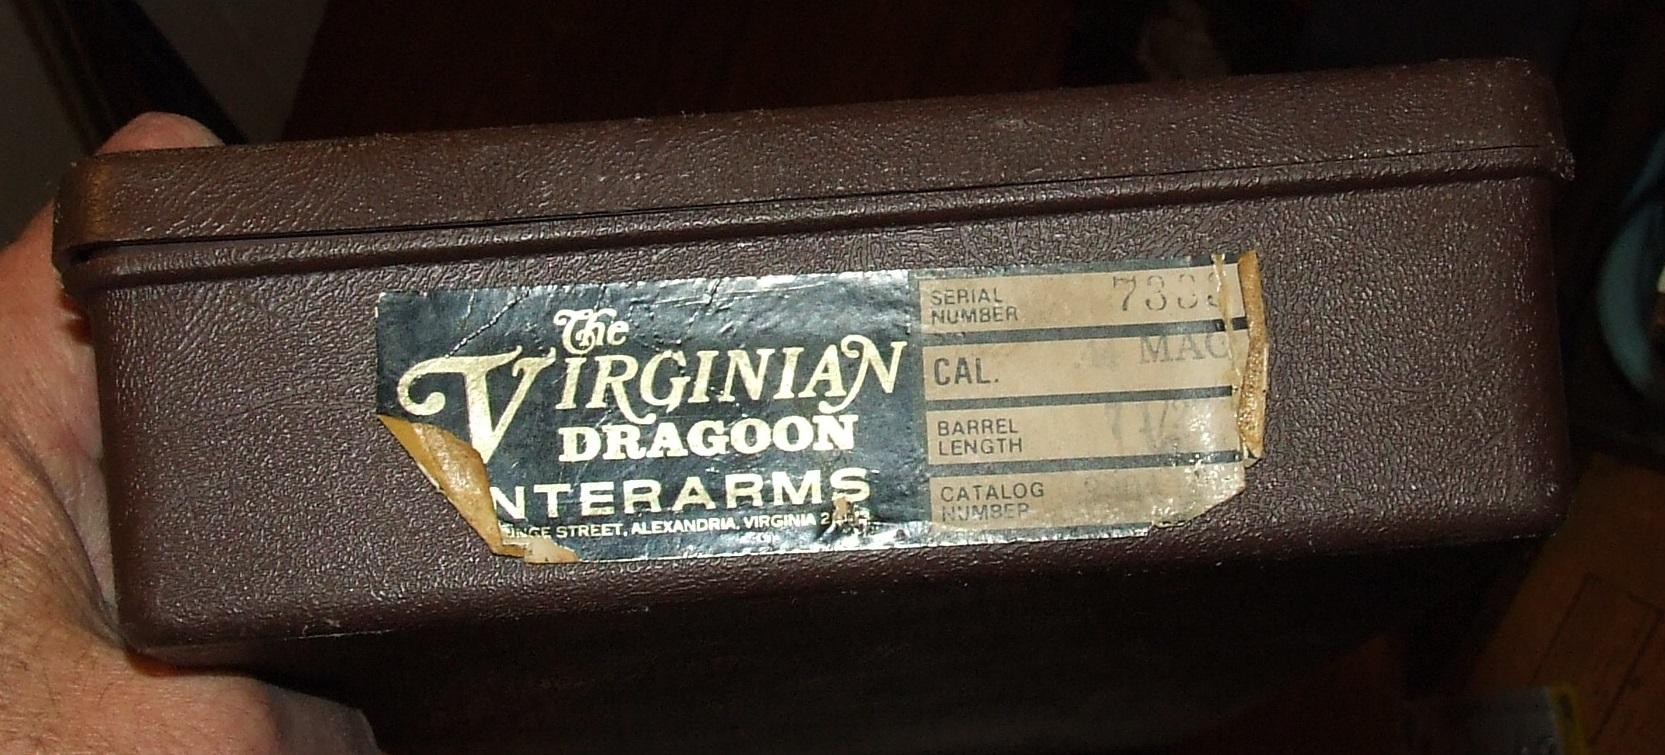 The Virginian Dragoon Box